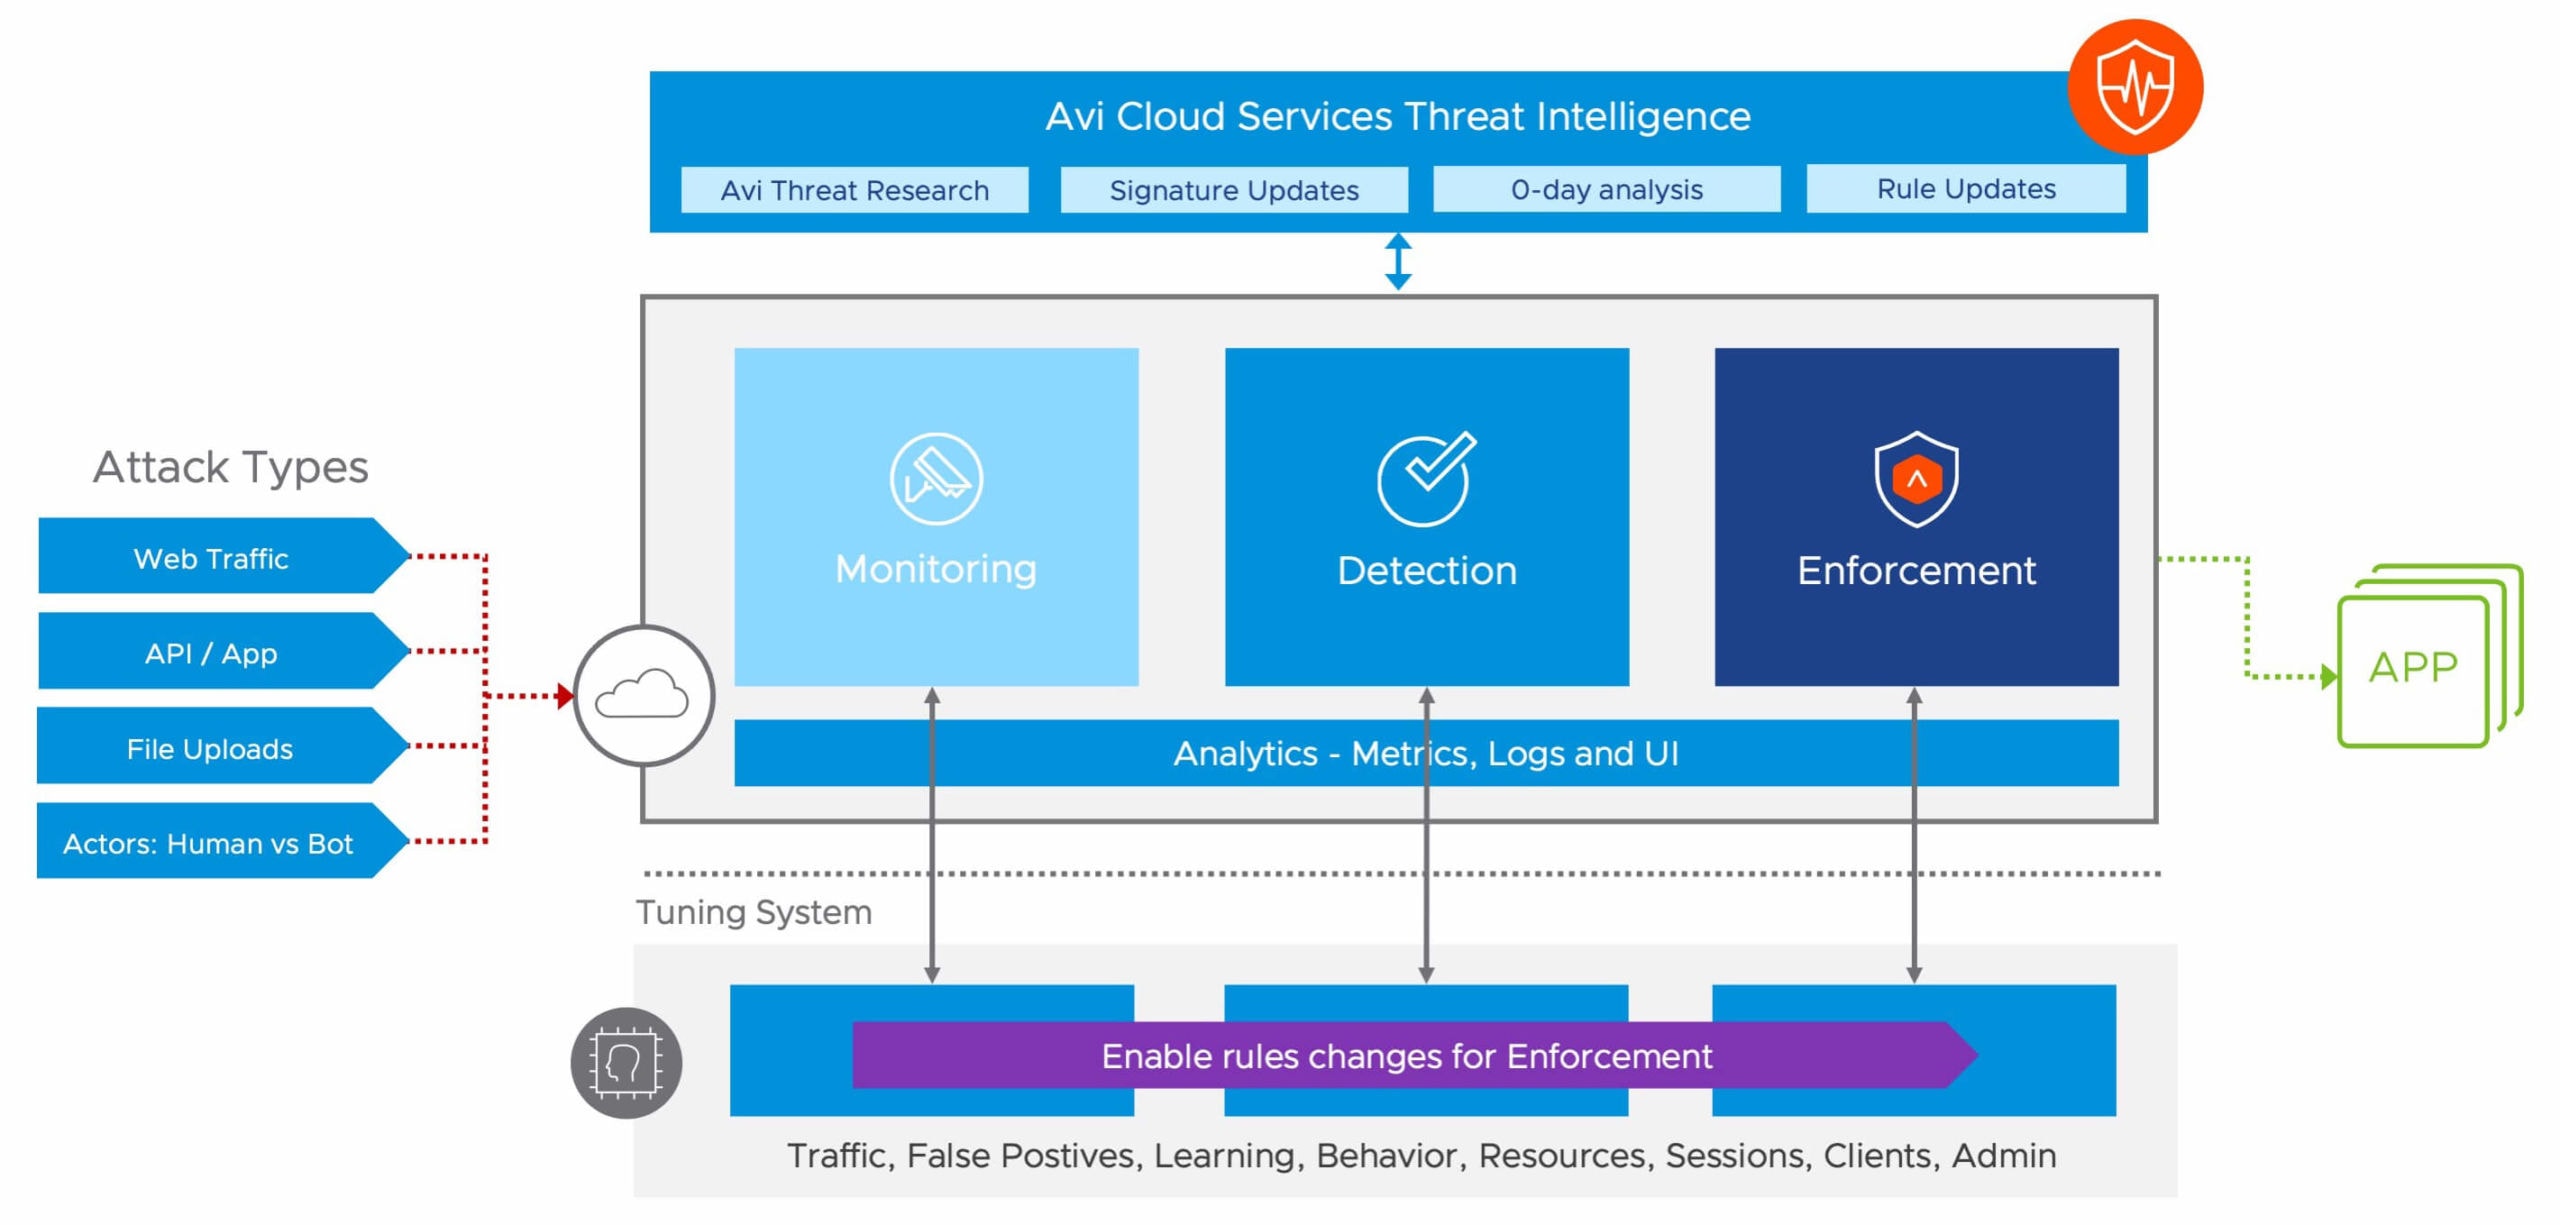 Avi Cloud Services Threat Intelligence Diagram